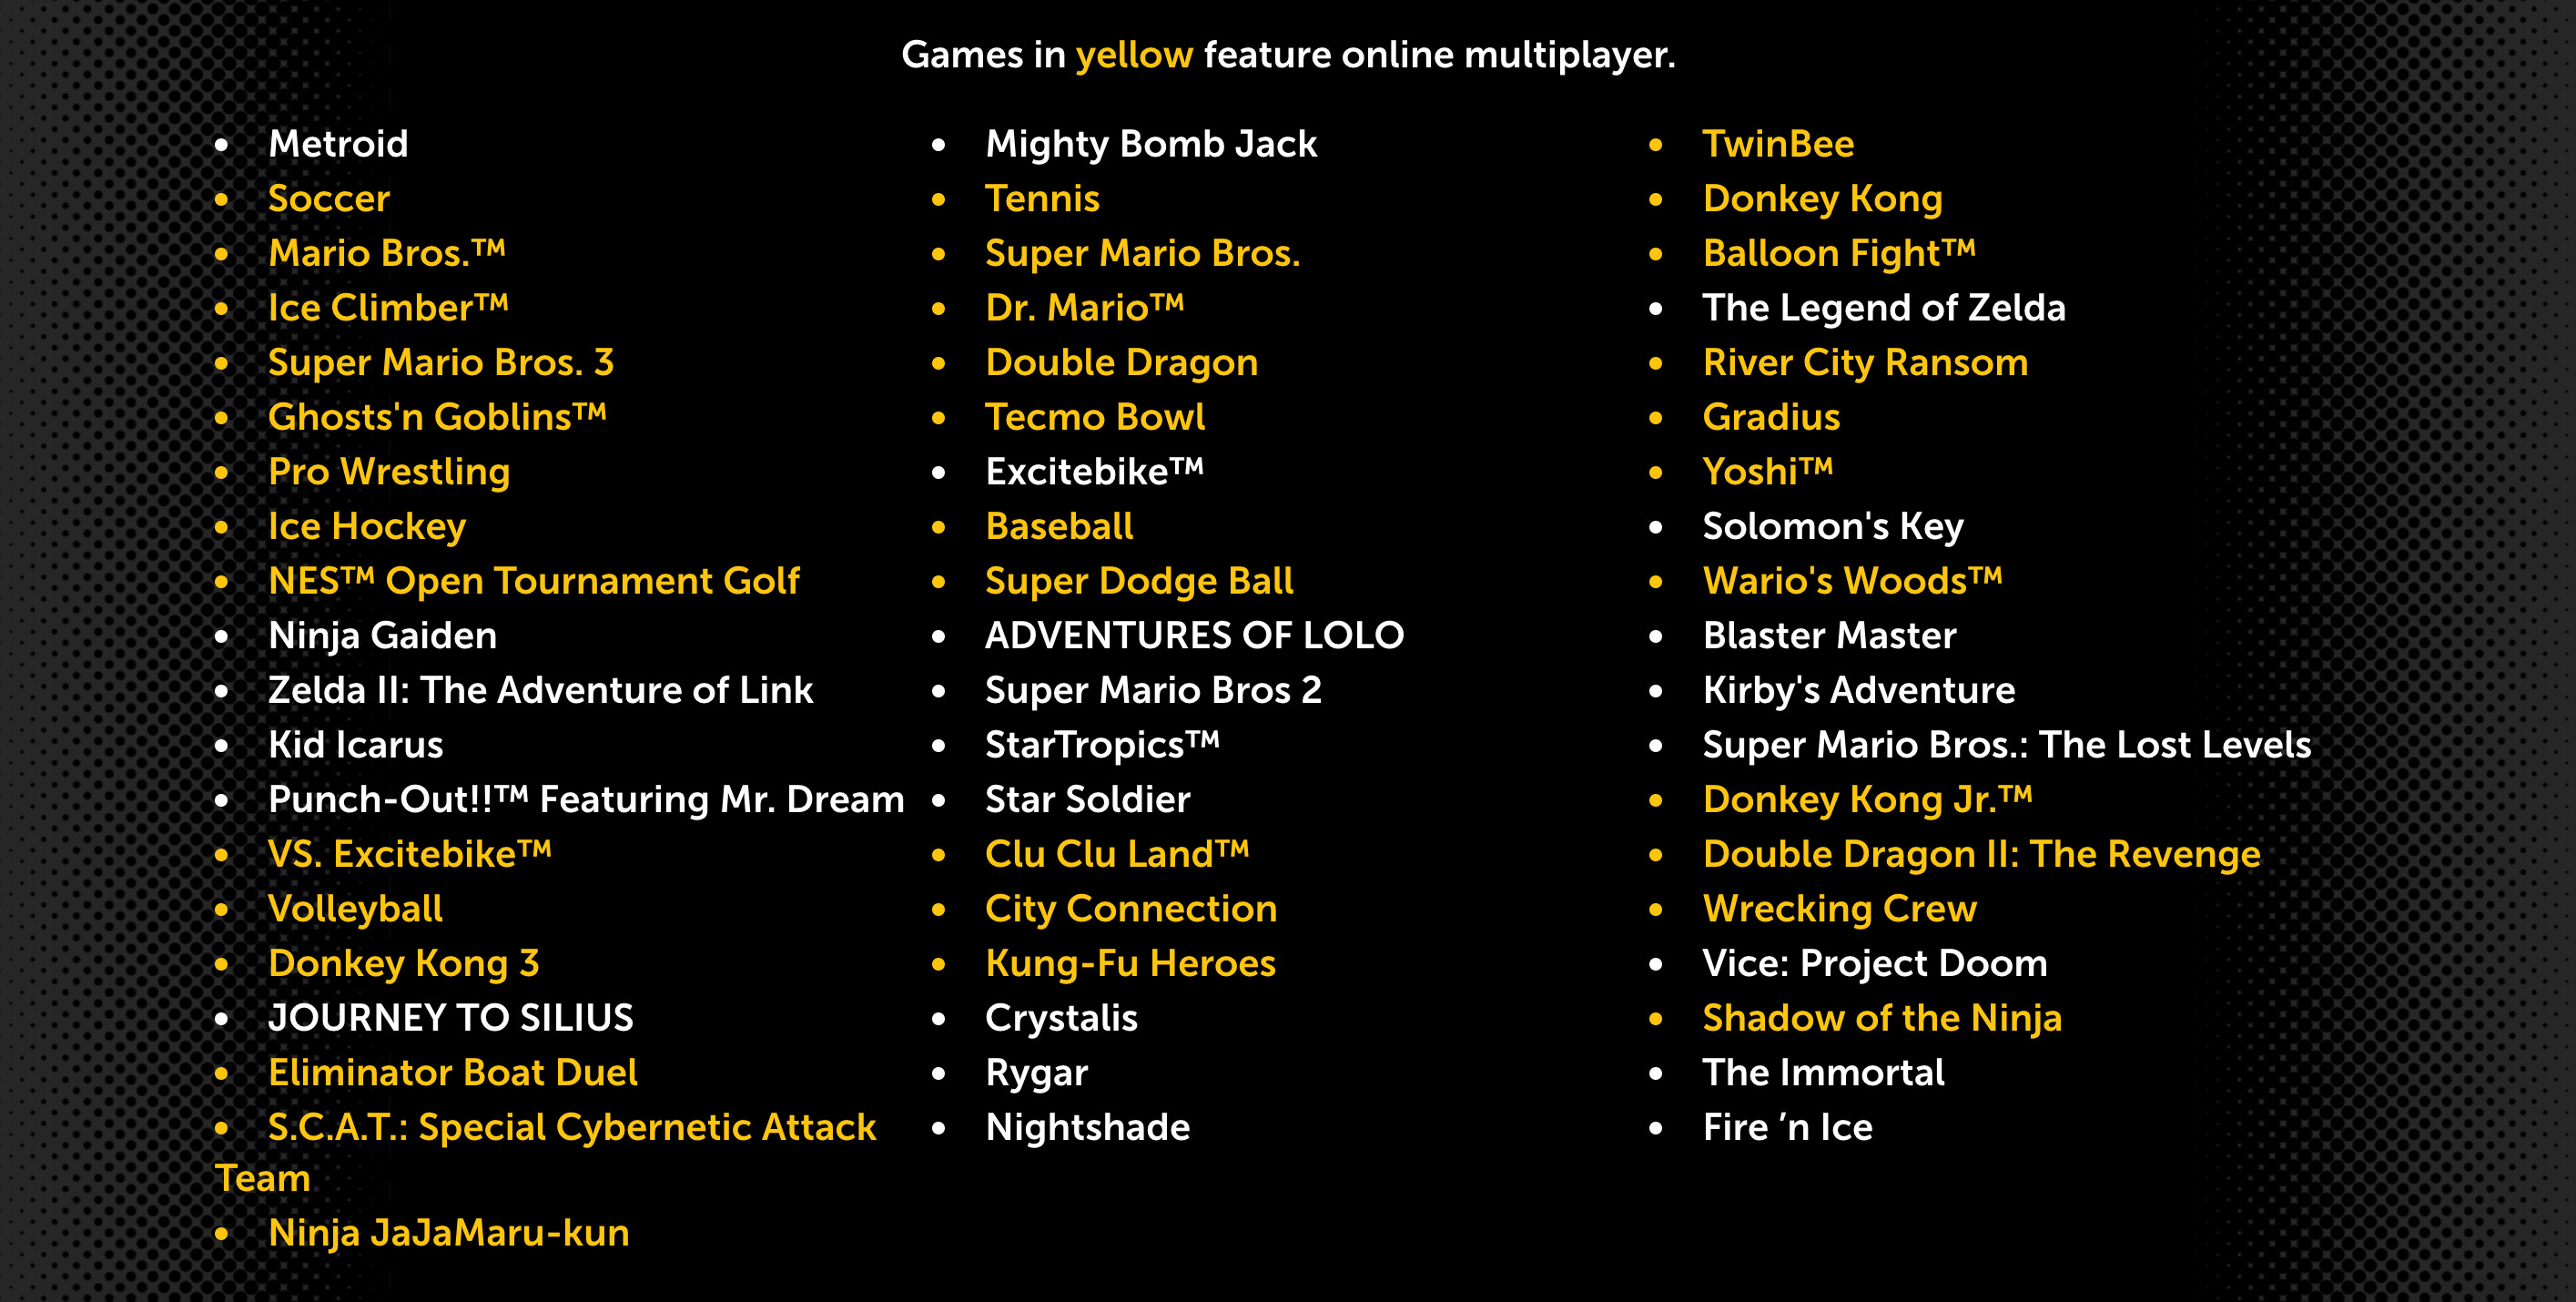 Bomberman Online Images - LaunchBox Games Database